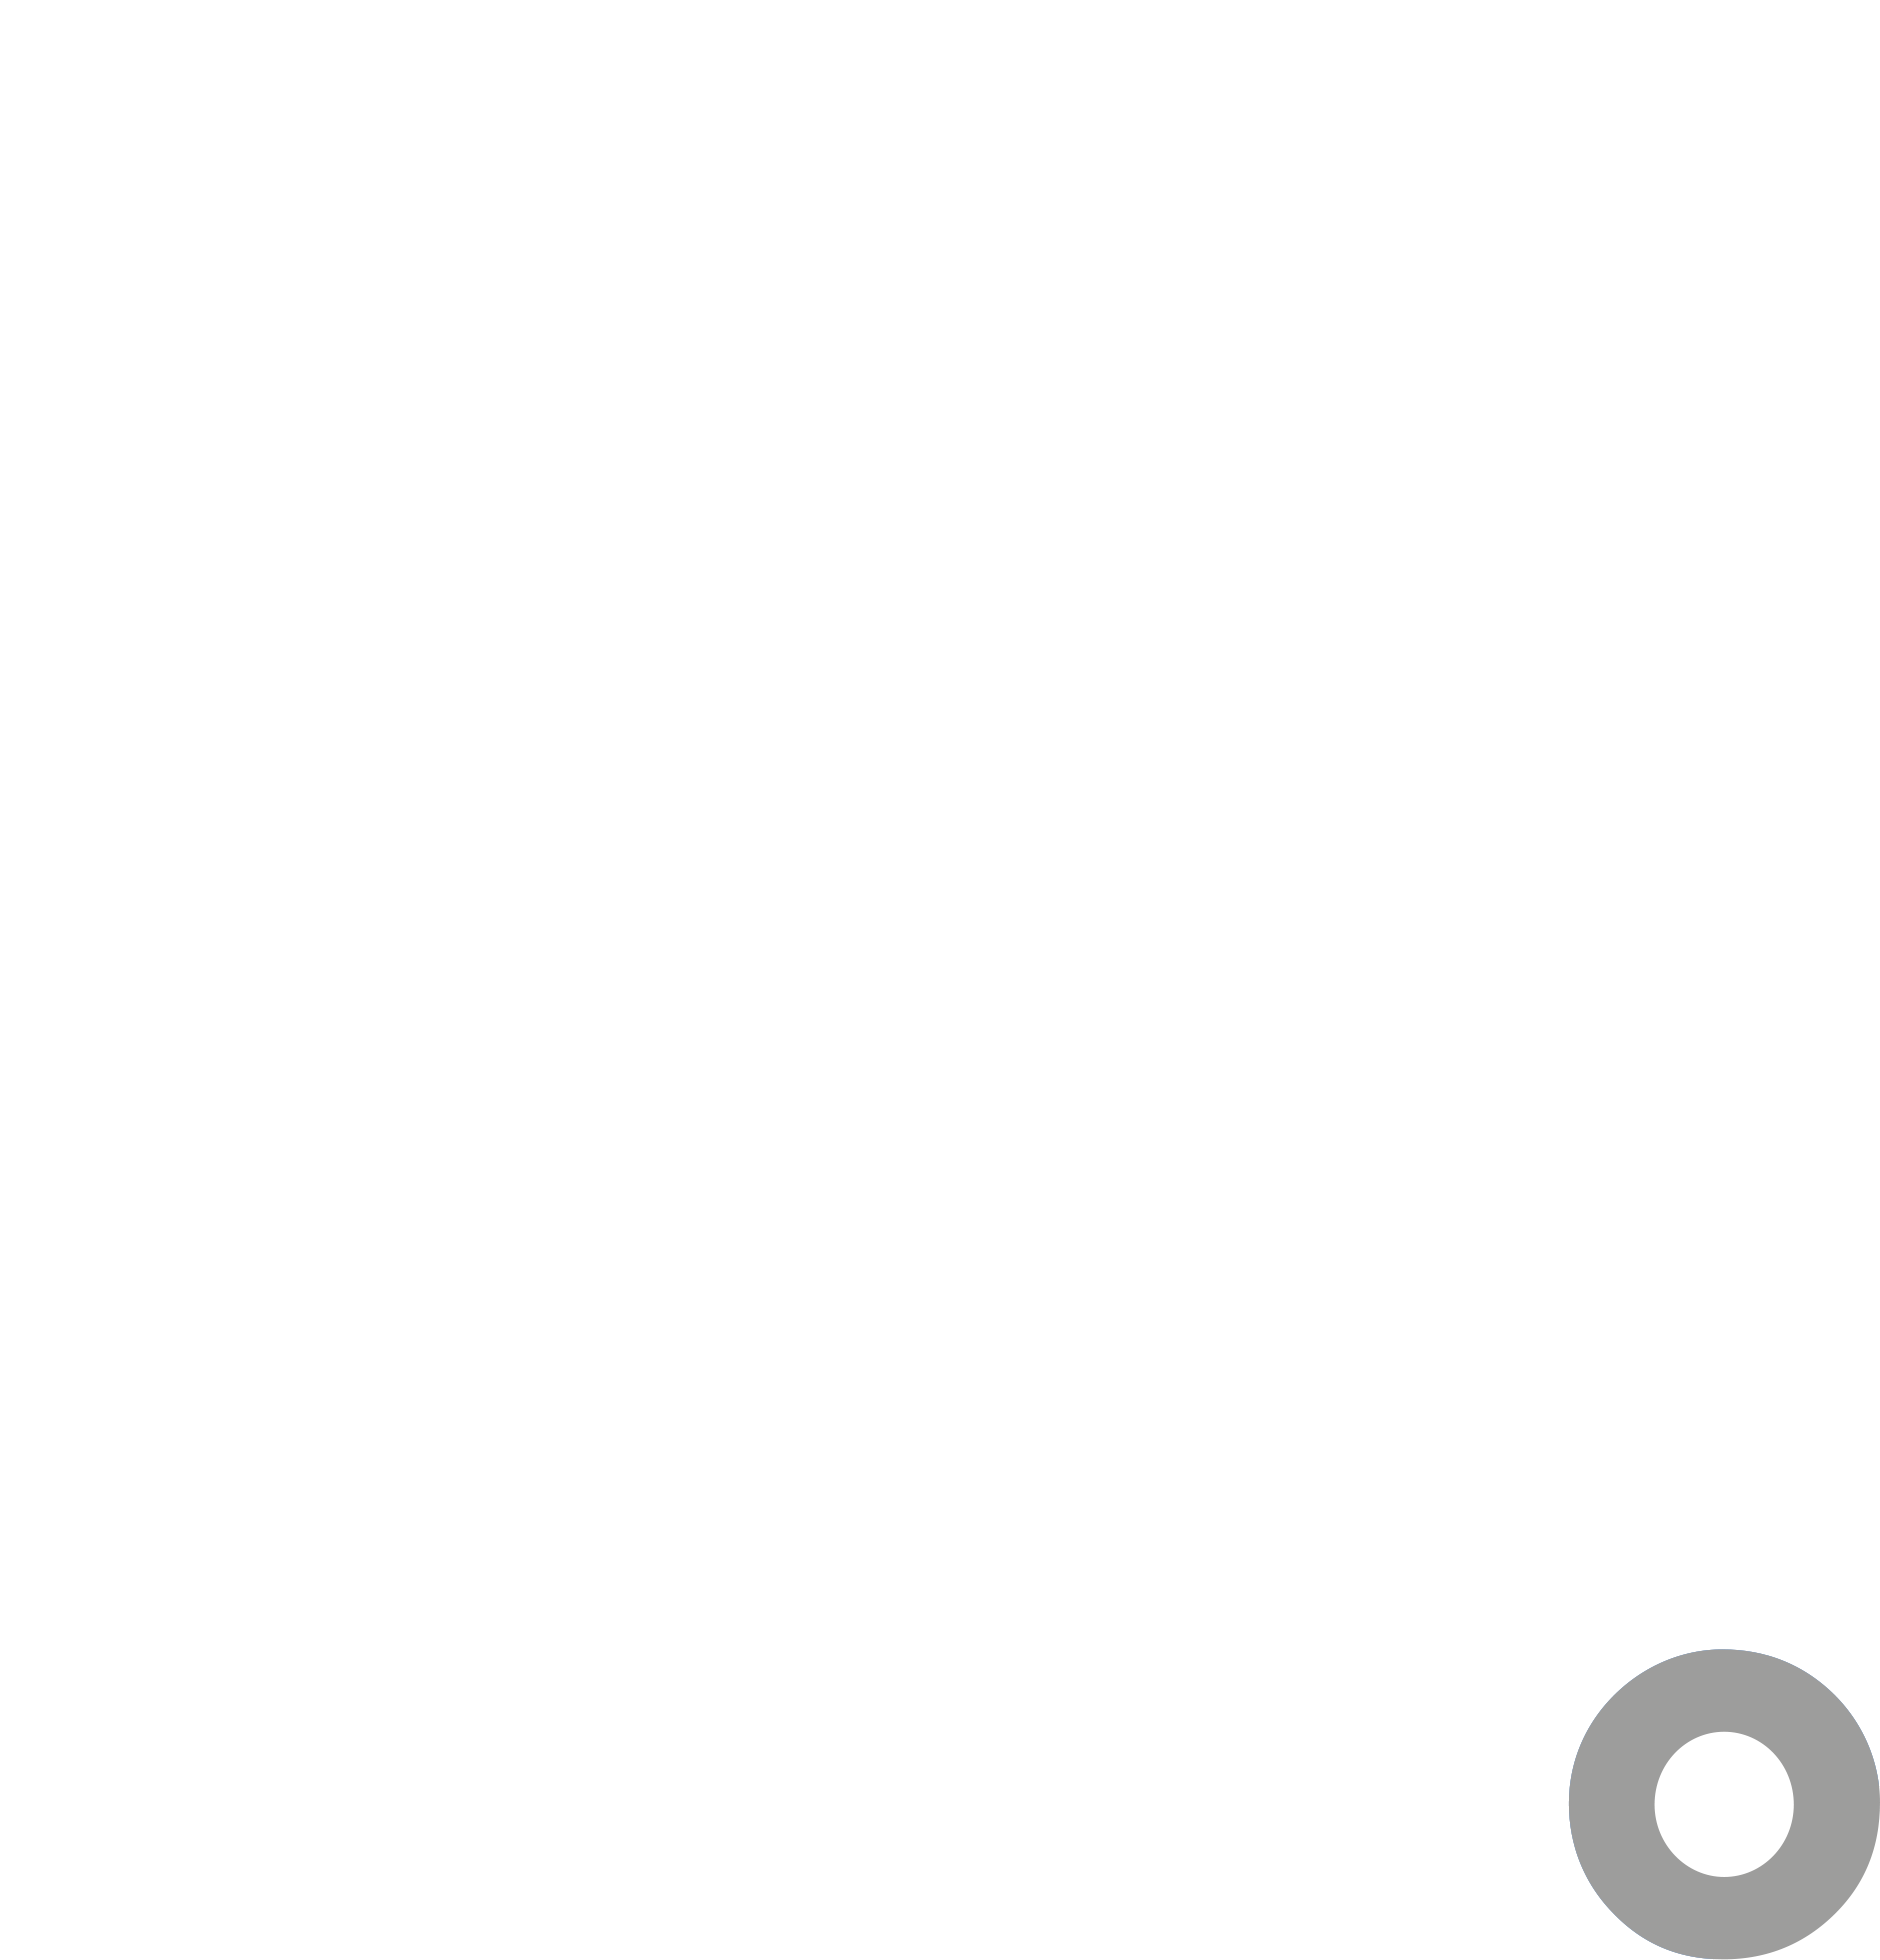 Cedaro Ltd